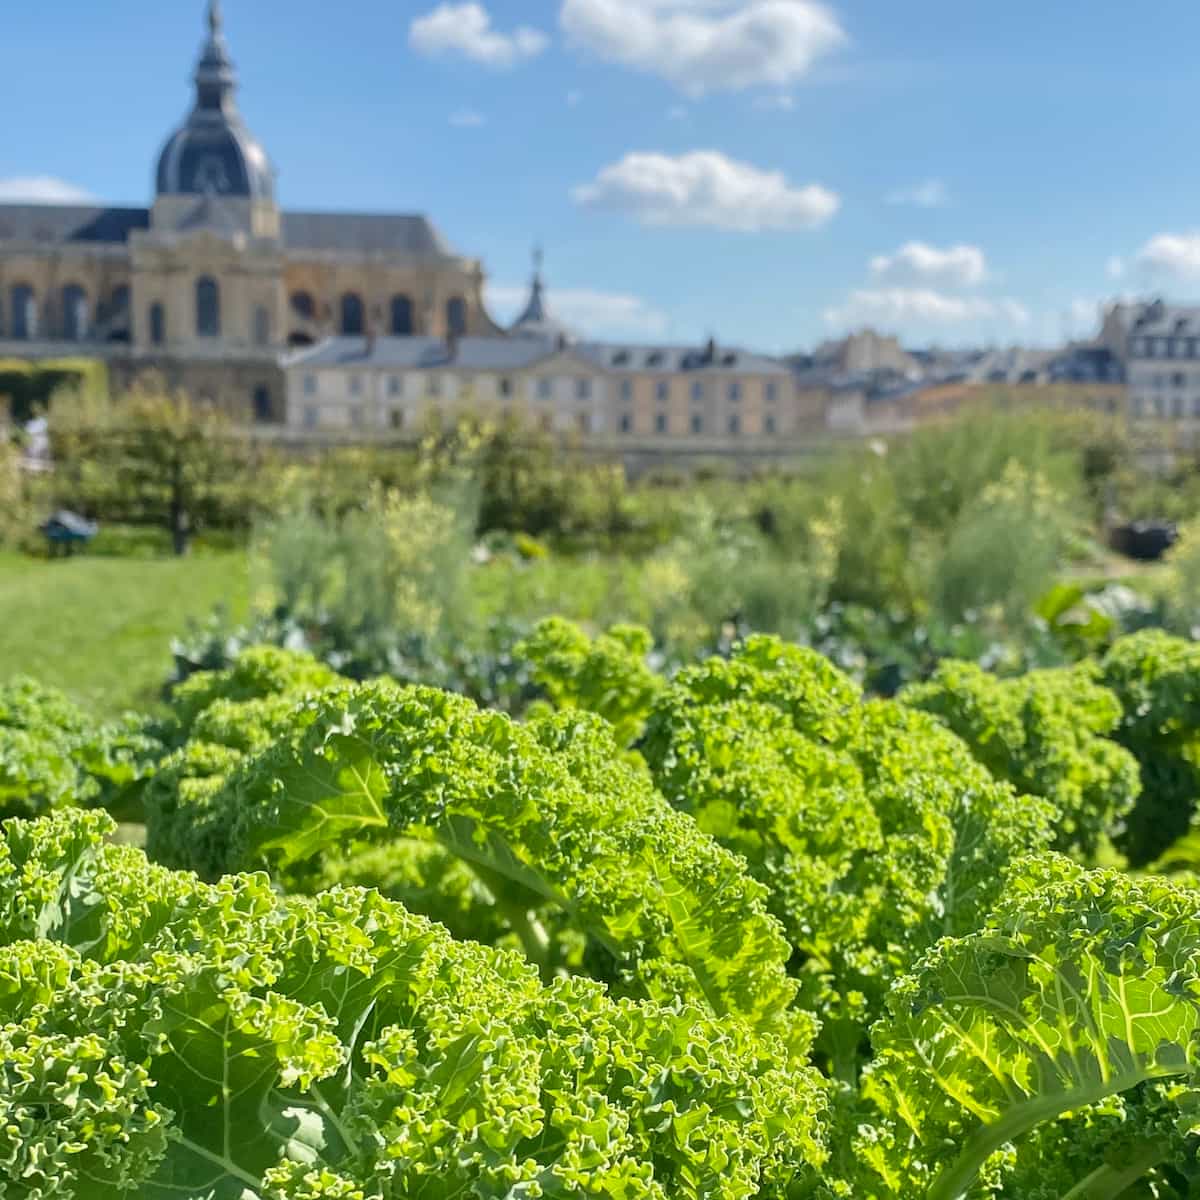 kale growing in the King's vegetable gardens in Versailles